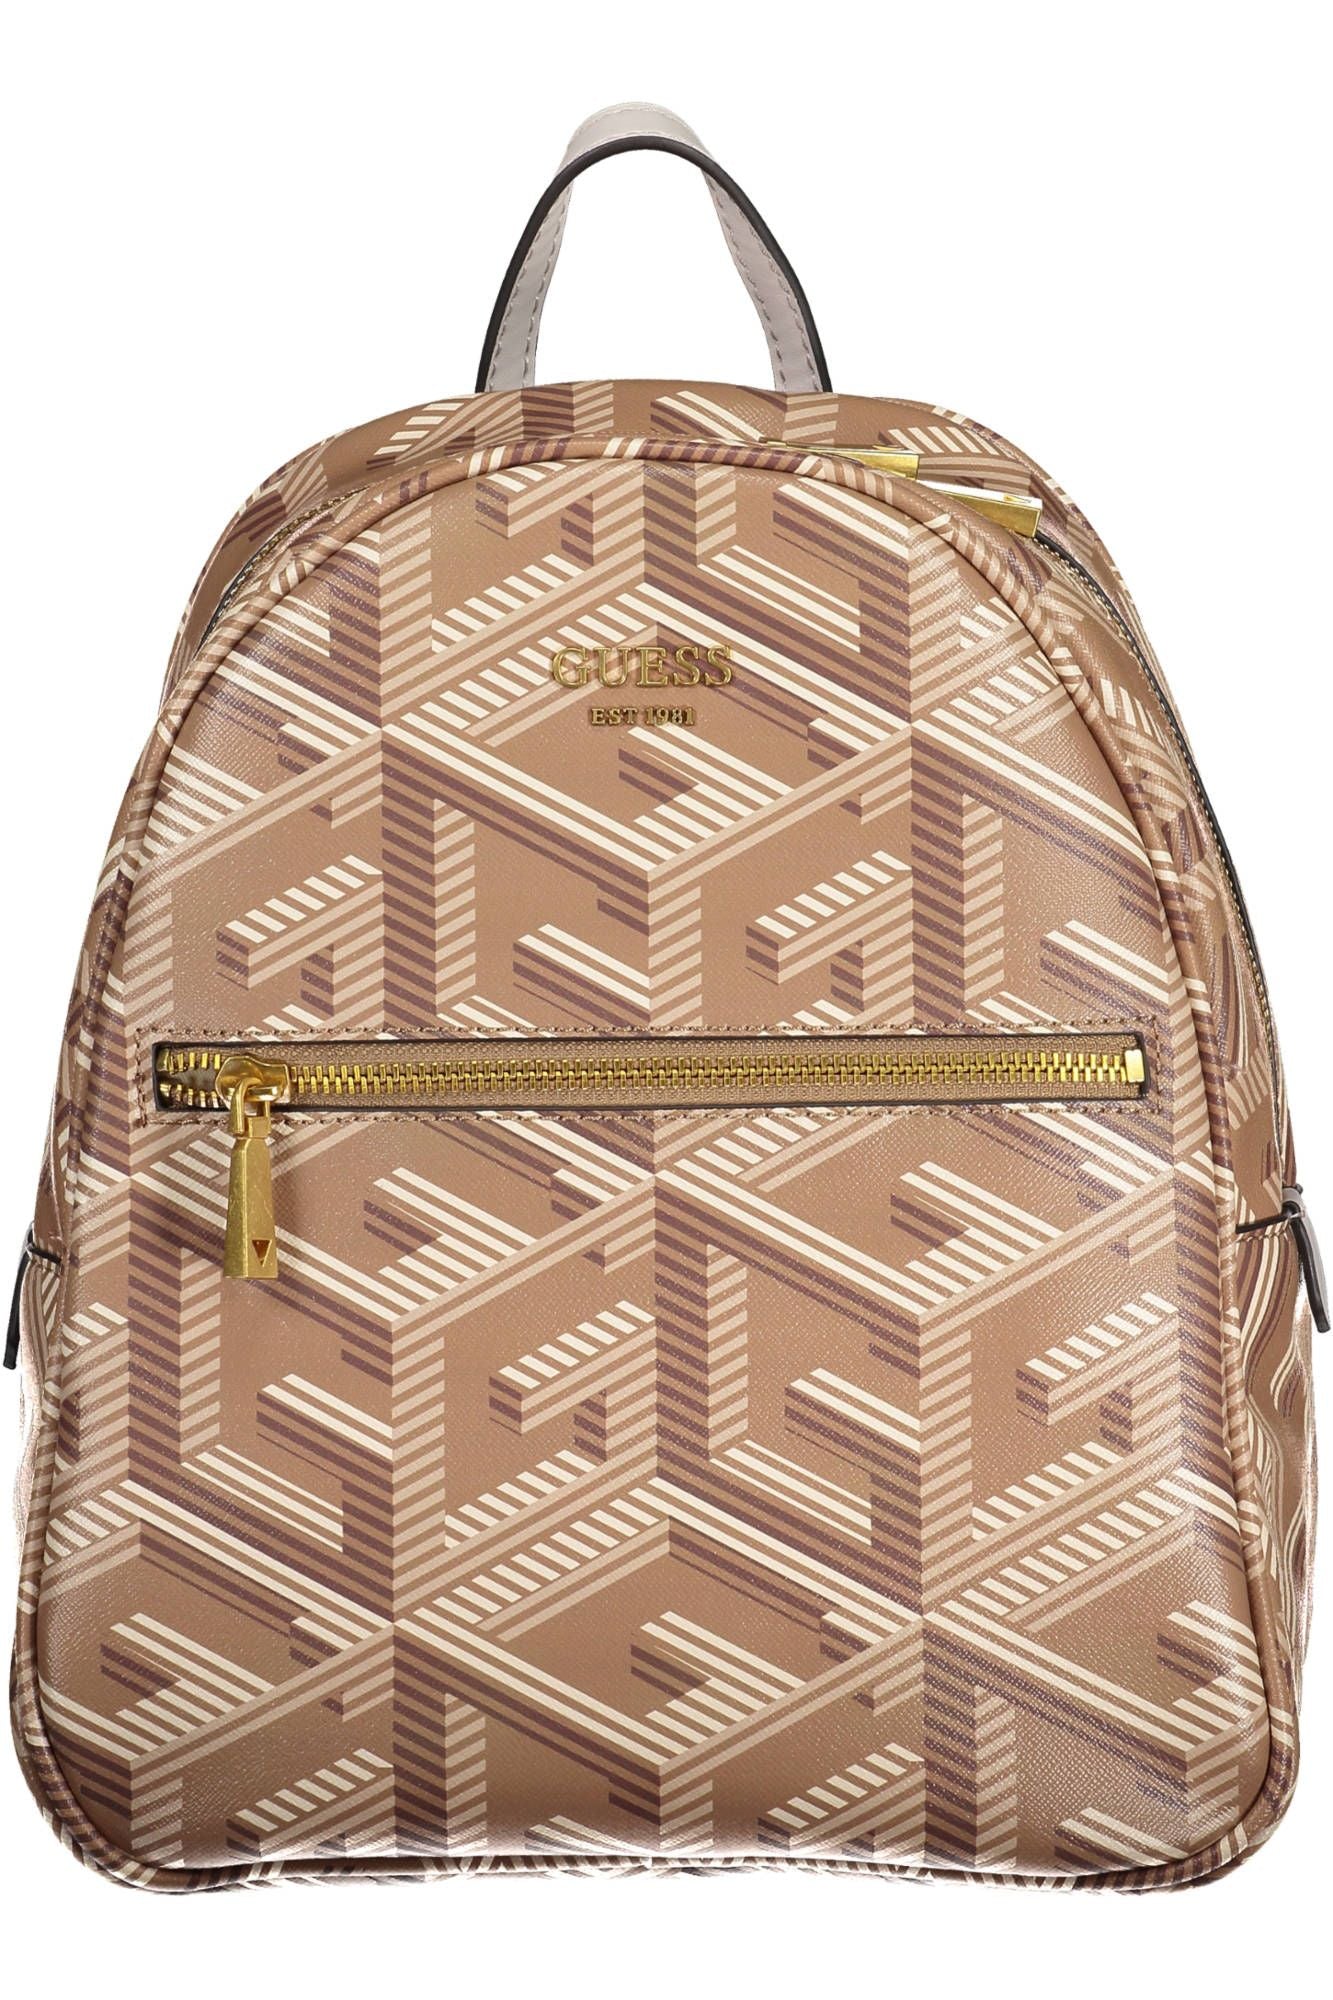 Chic Brown Backpack with Elegant Logo Detailing